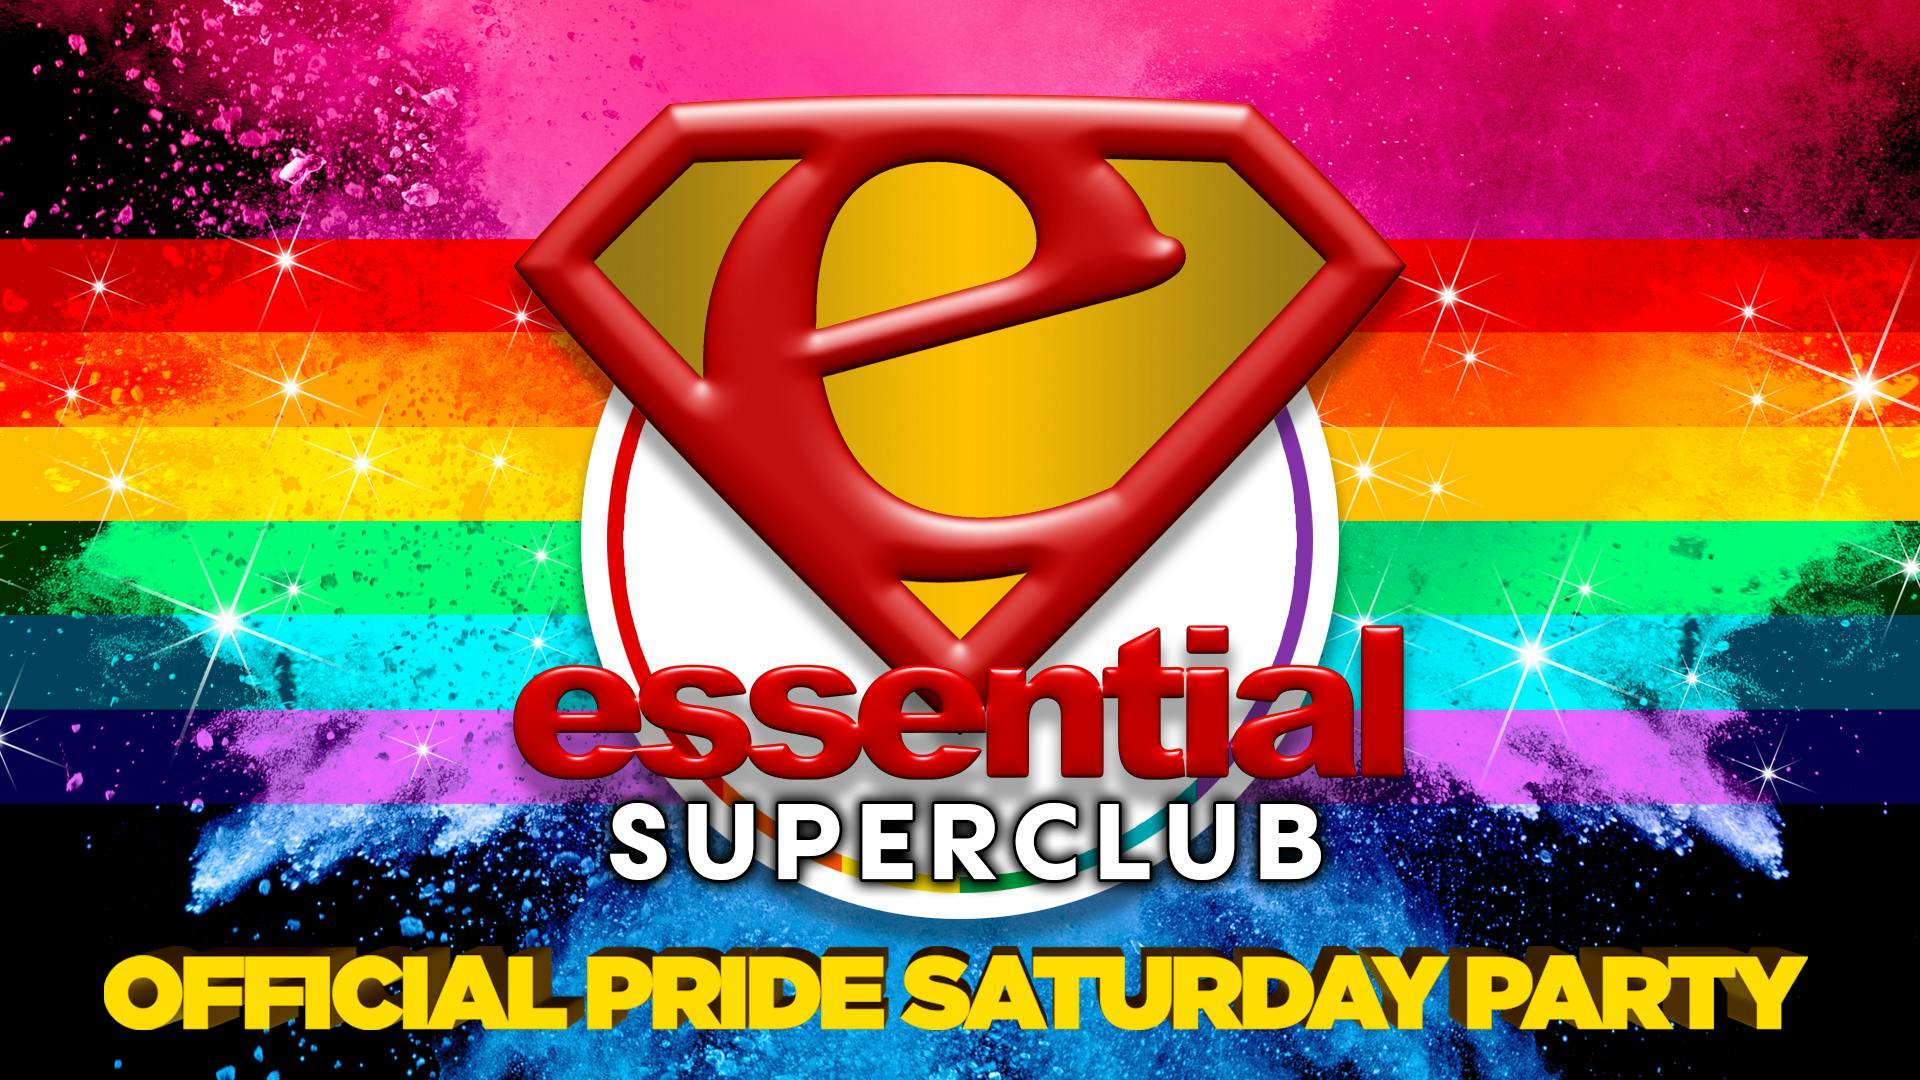 Essential SUPERCLUB: The Official Pride Saturday Event